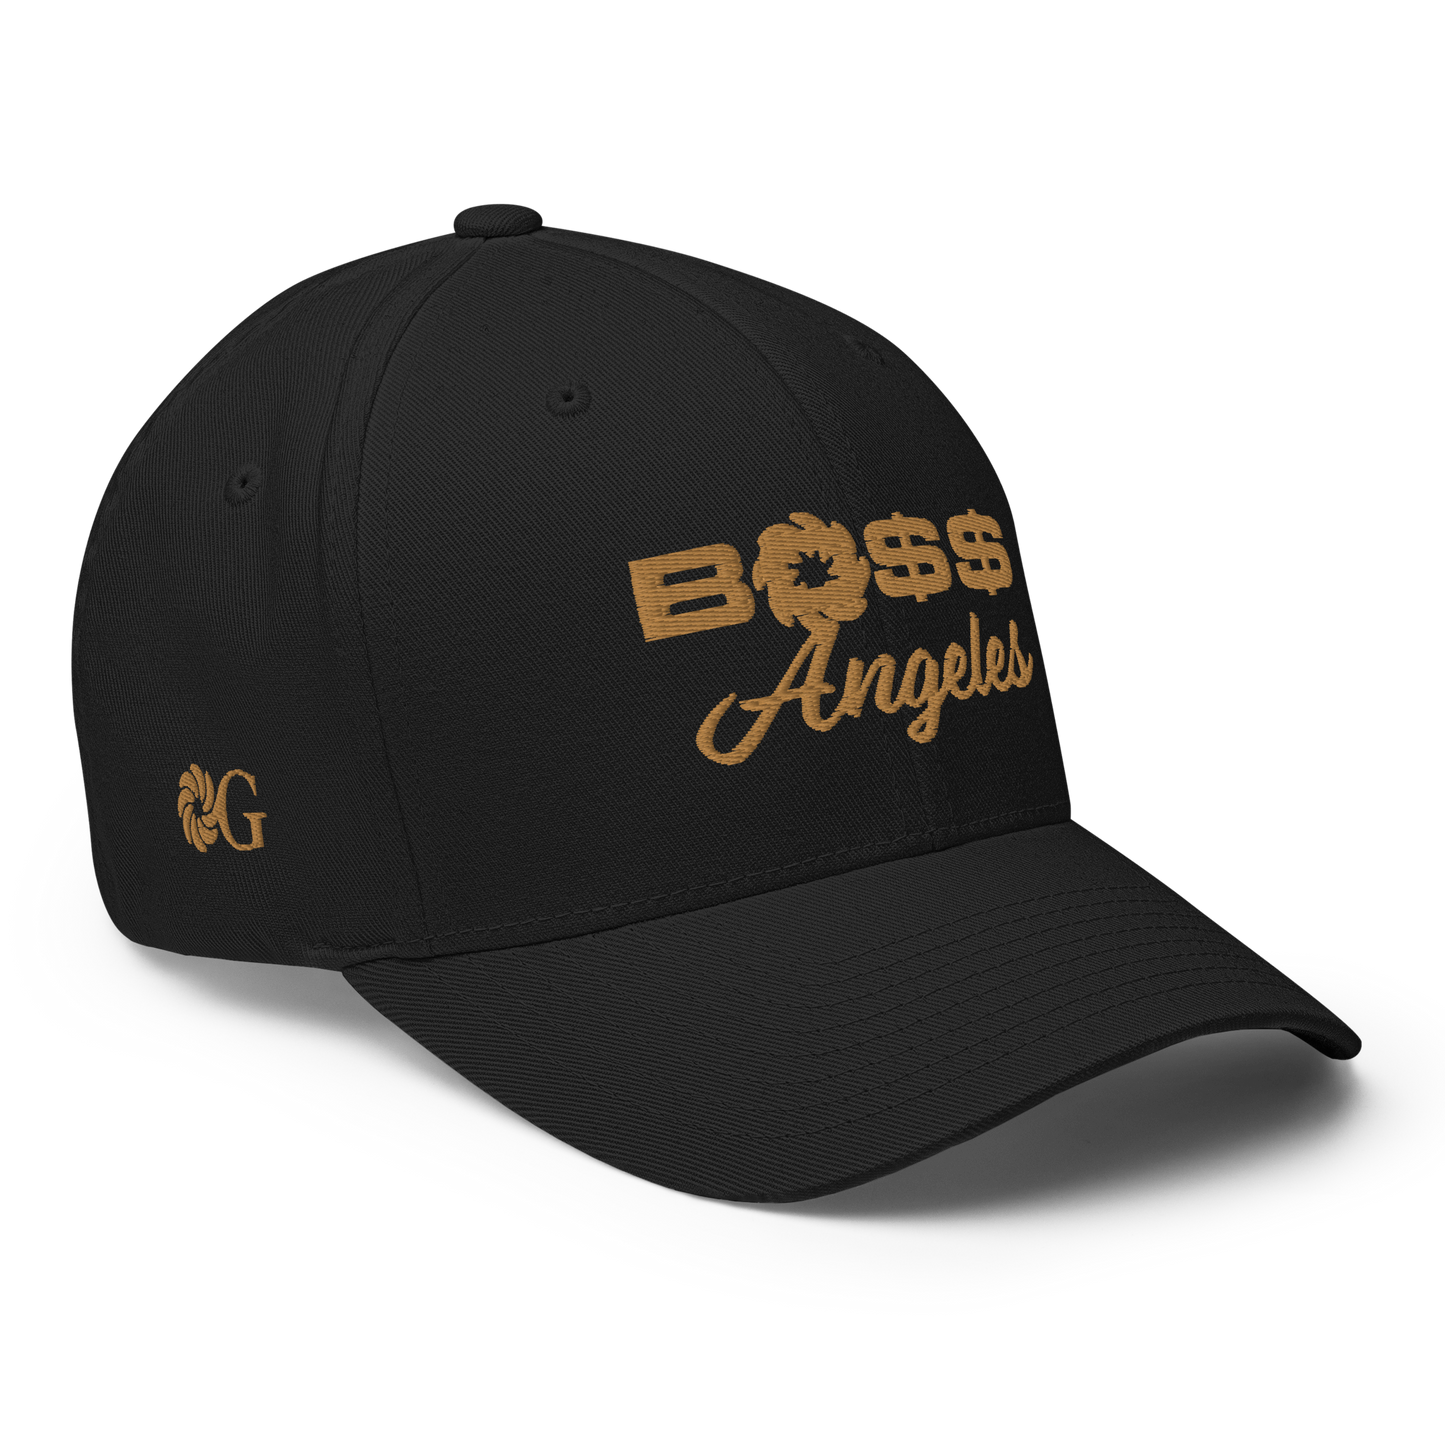 Twill Cap: Boss Angeles